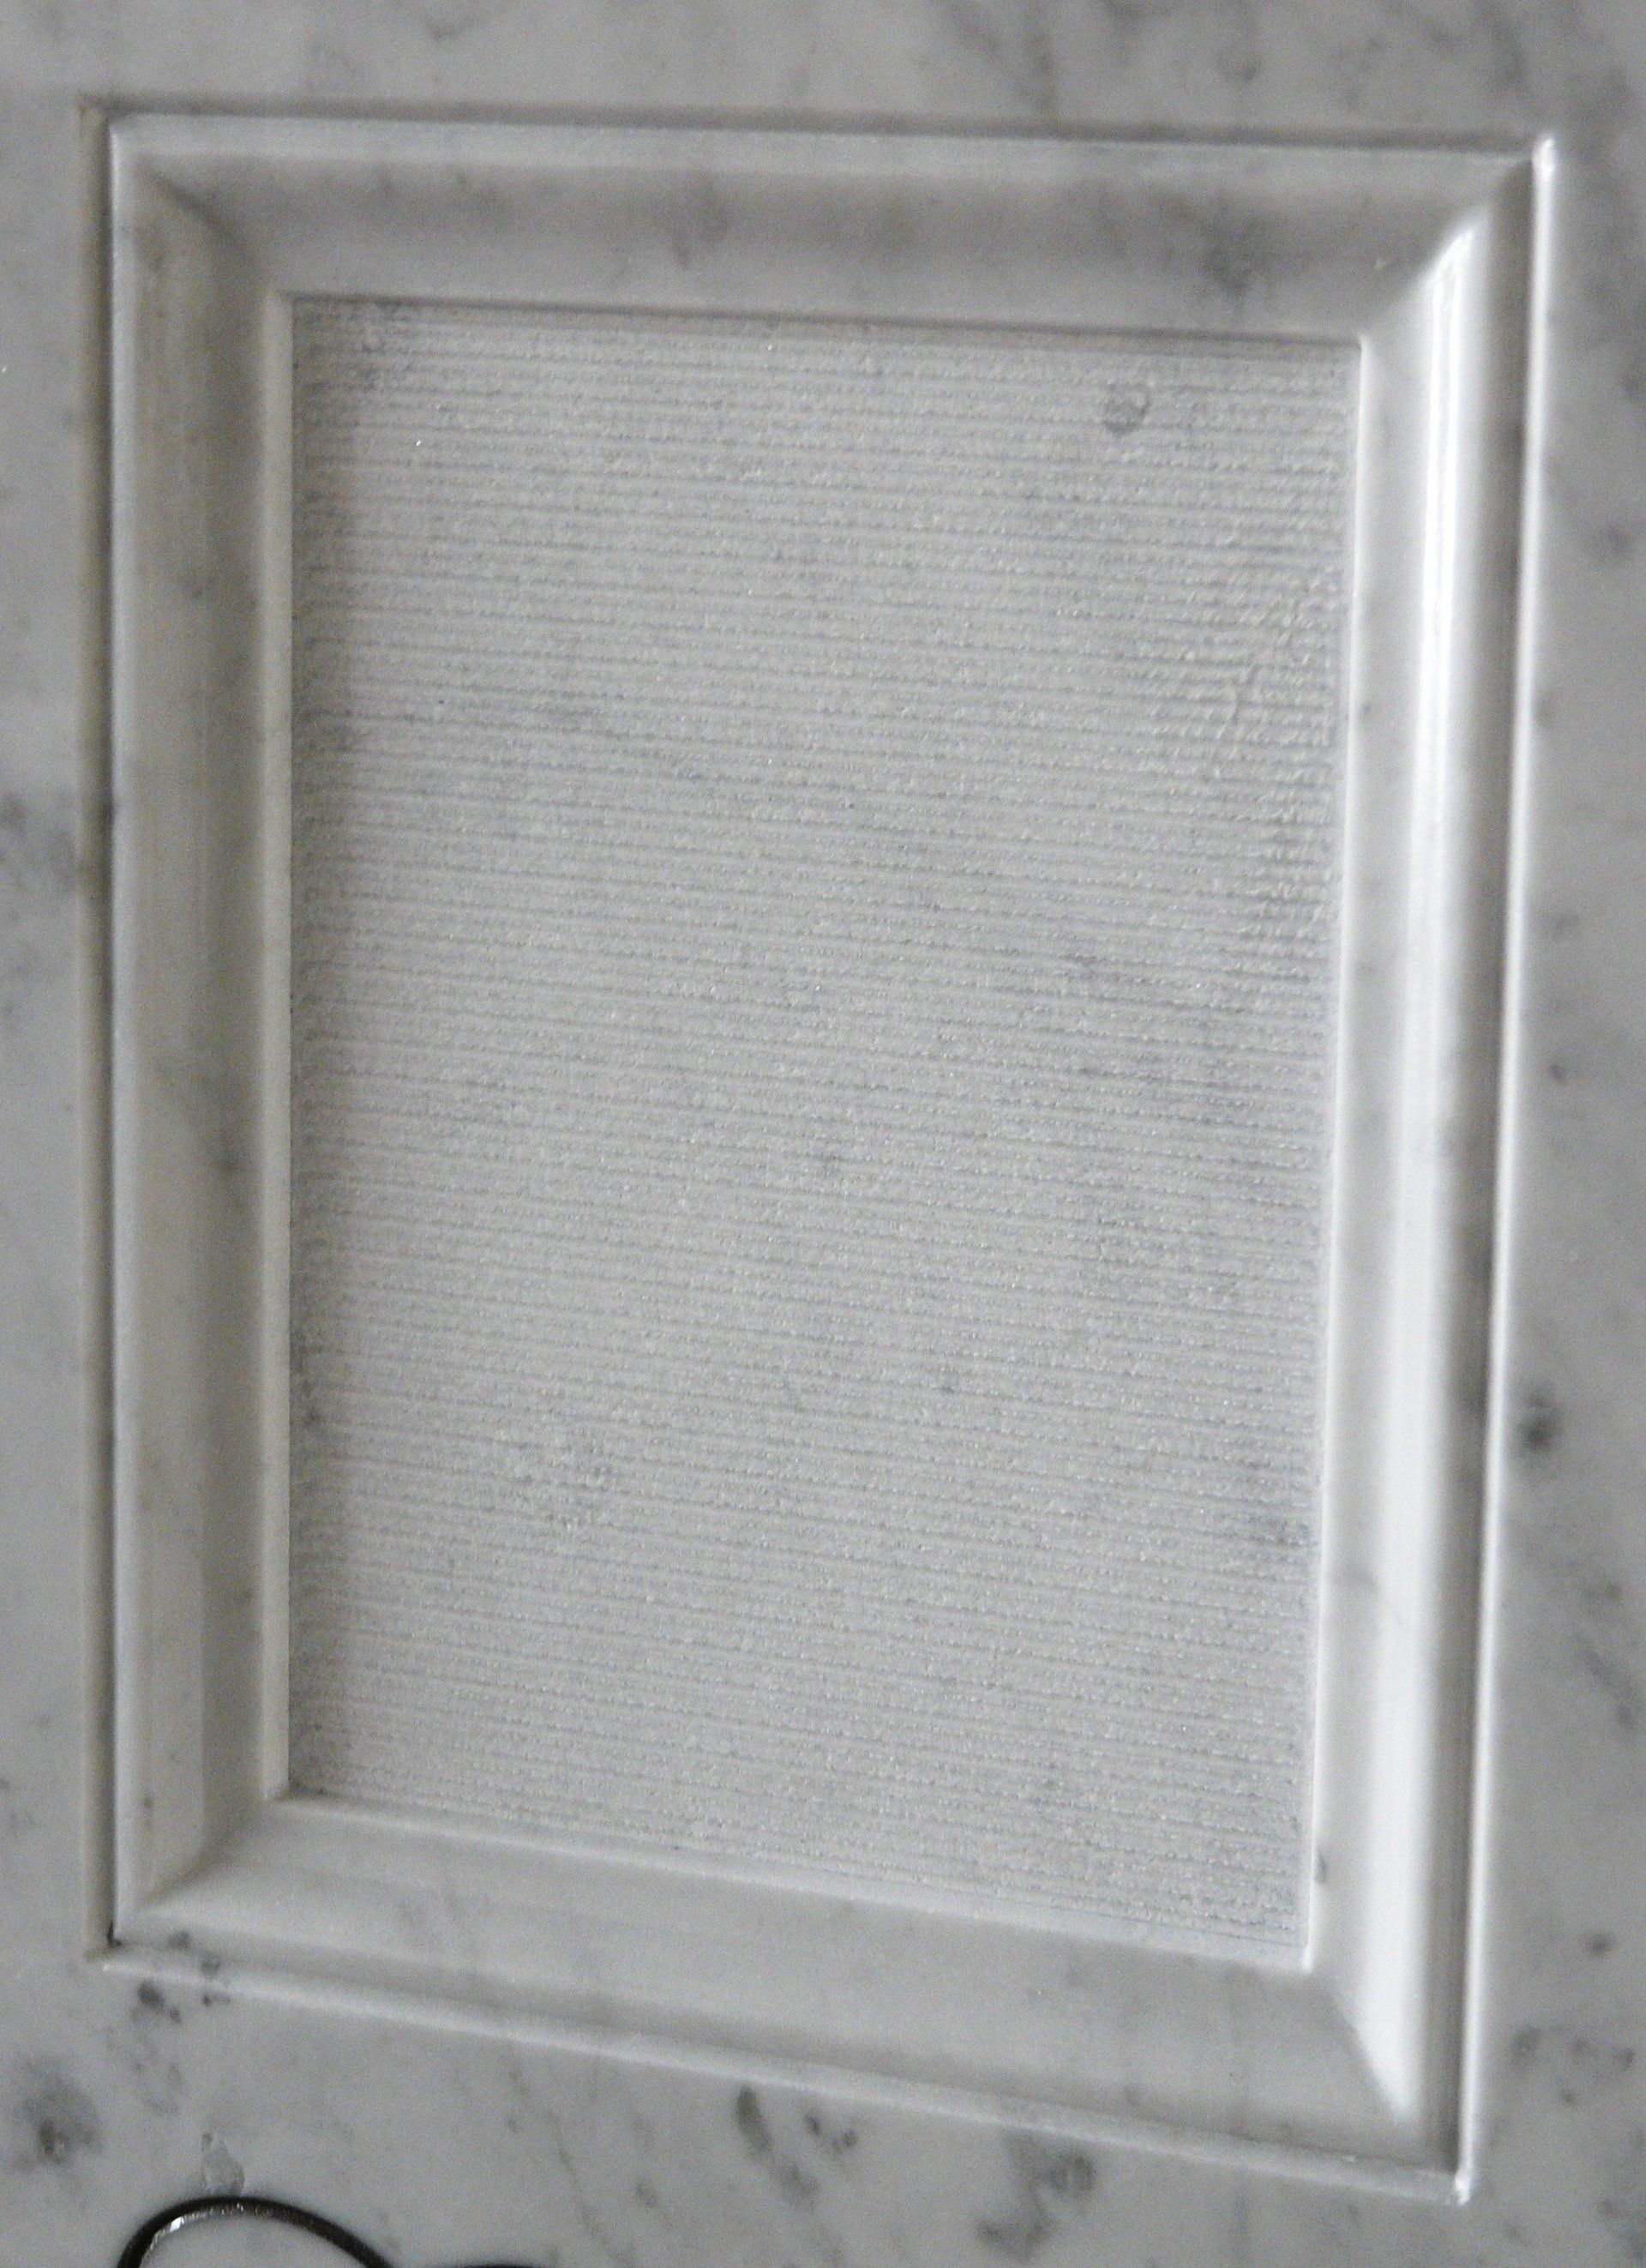 bassorilievo su marmo bianco rappresentante una cornice